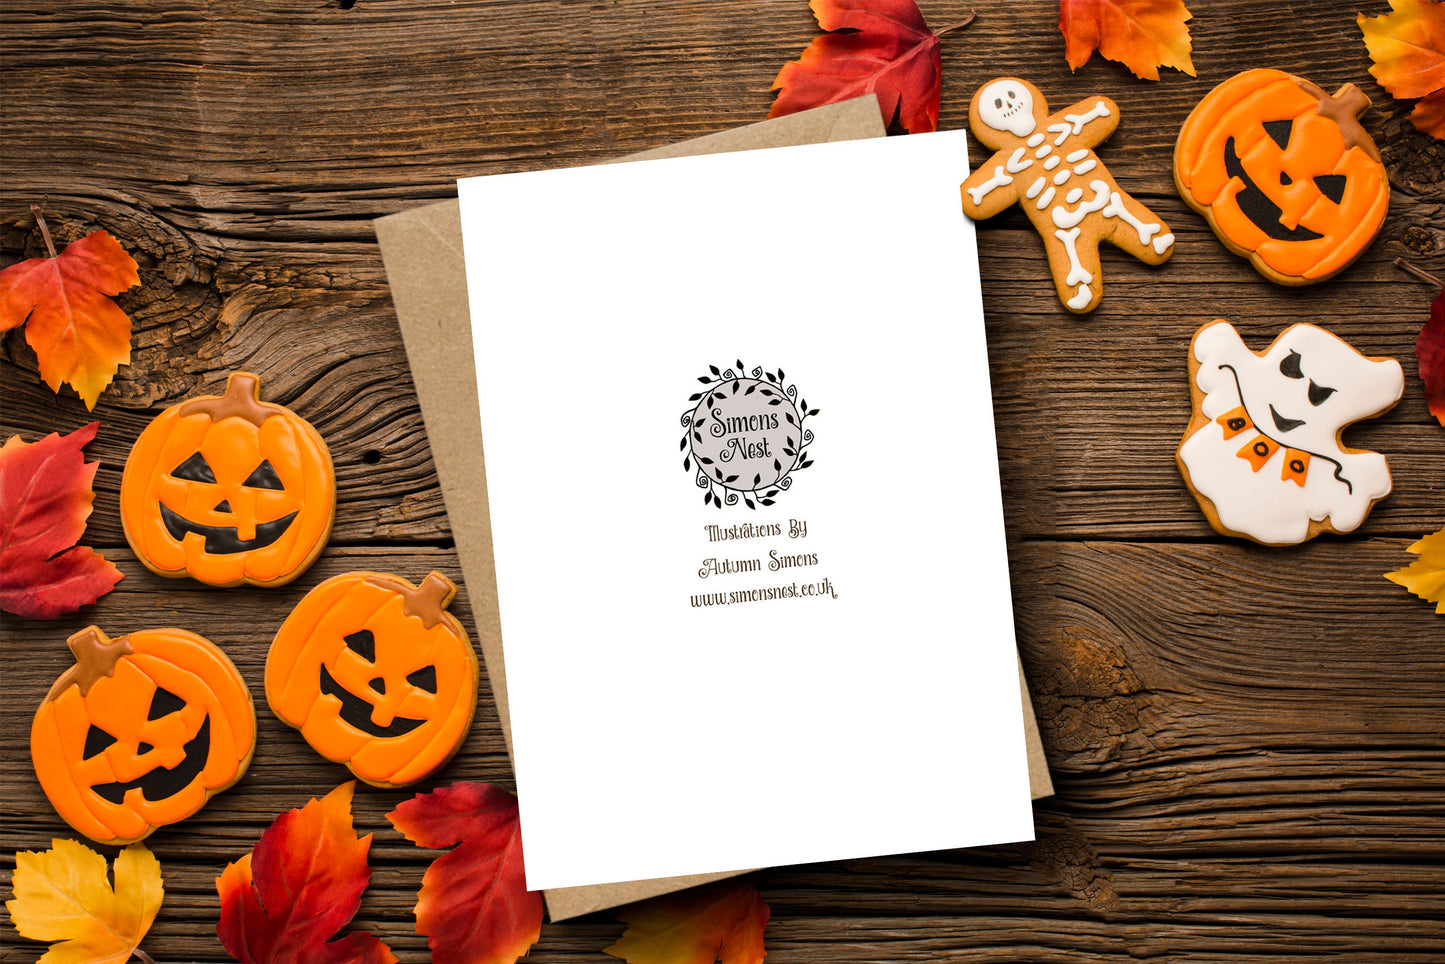 Moonlight Flight Greetings Card & Envelope - Retro Vintage Halloween Witch Silhouette Card - Orange Leaves Pumpkin Patch Spooky Samhain Card